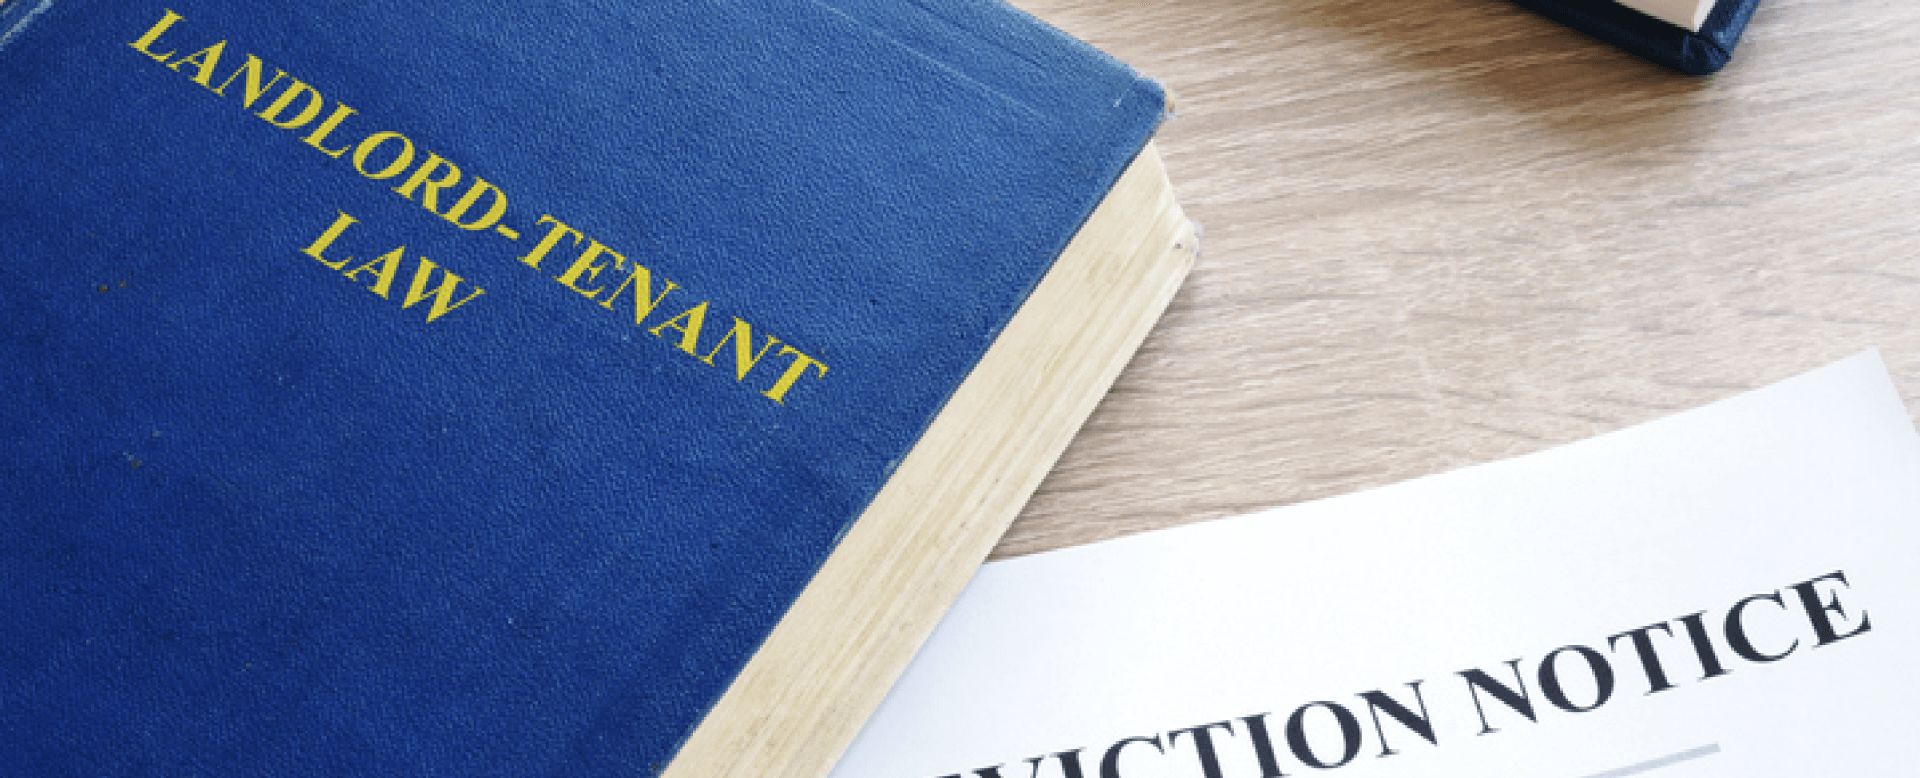 Meth Landlord tenant law 